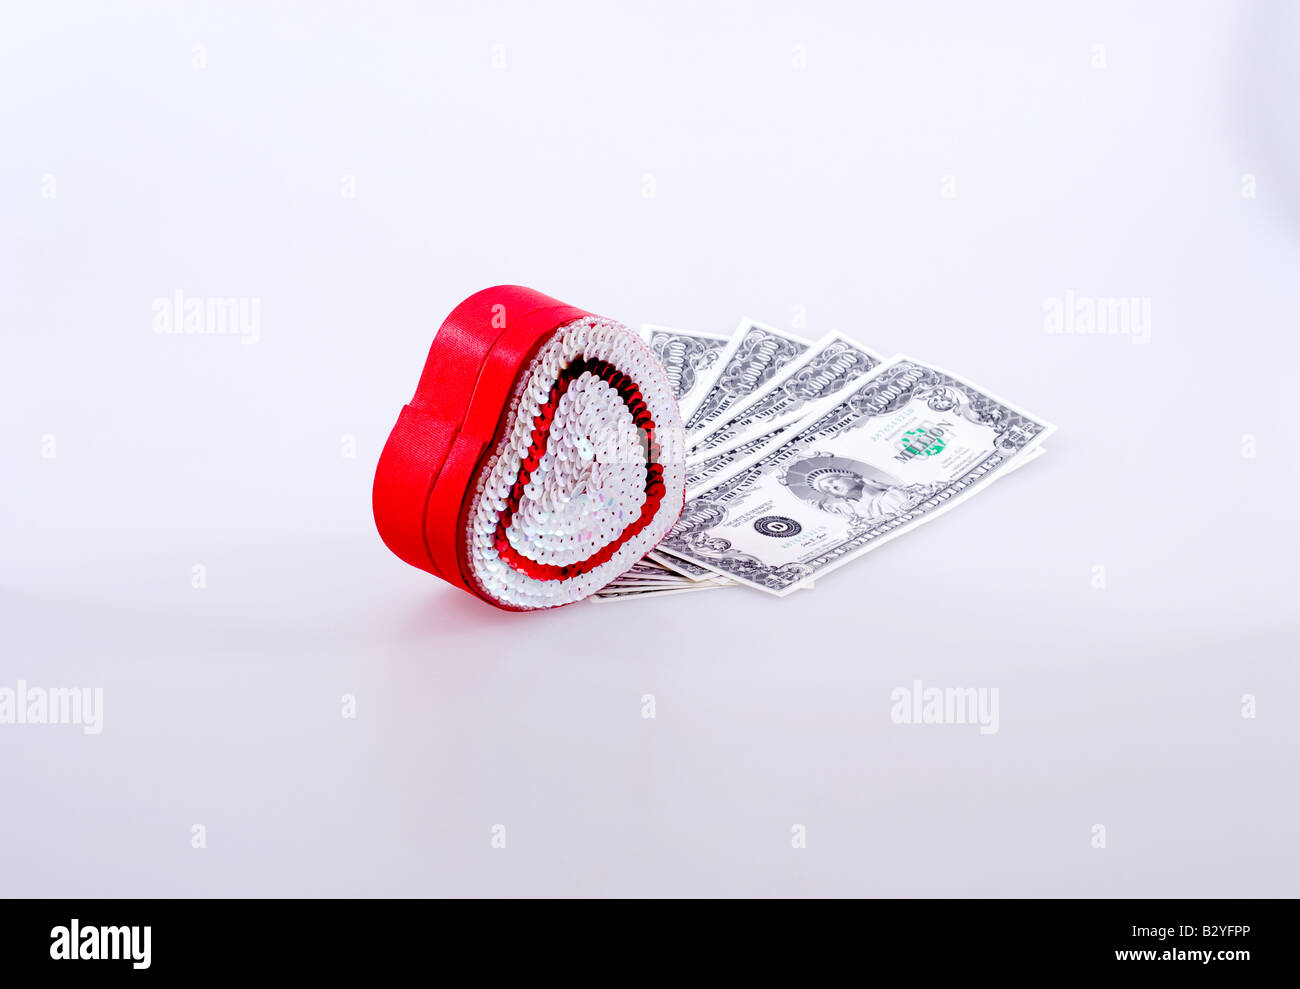 Small heart-shaped candy box next to fake million dollar bills Stock Photo